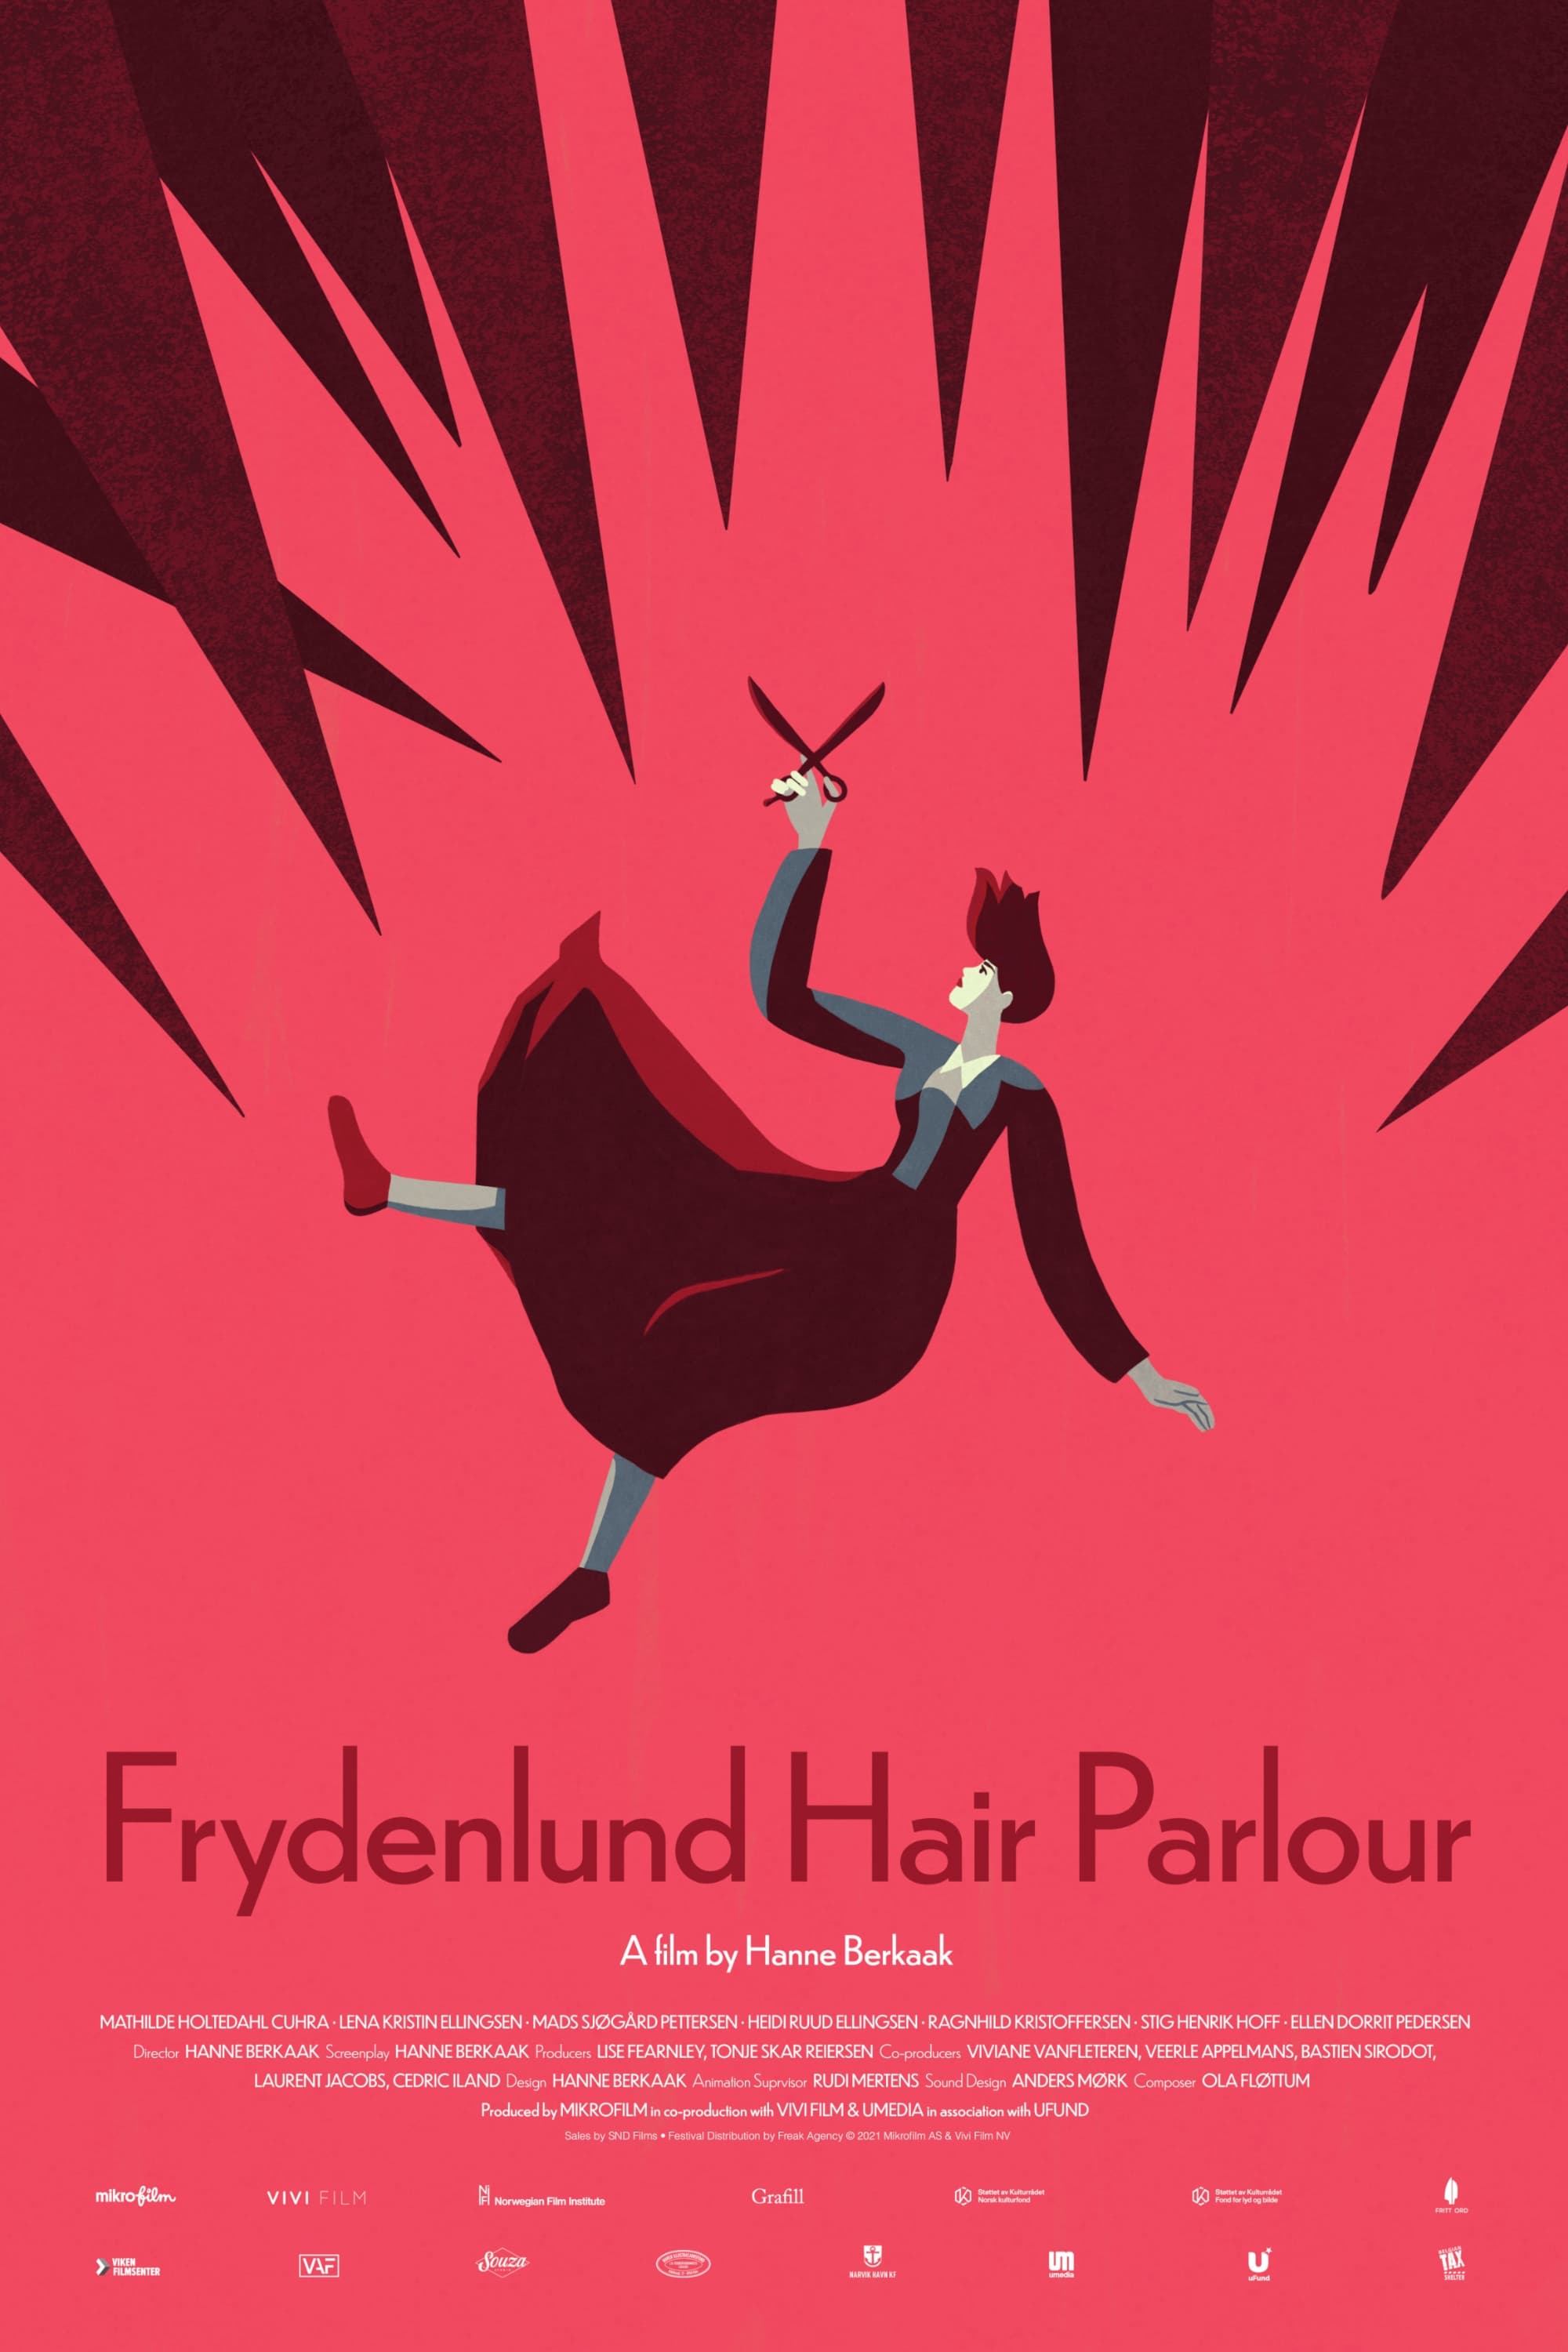 Frydenlund Hair Parlour